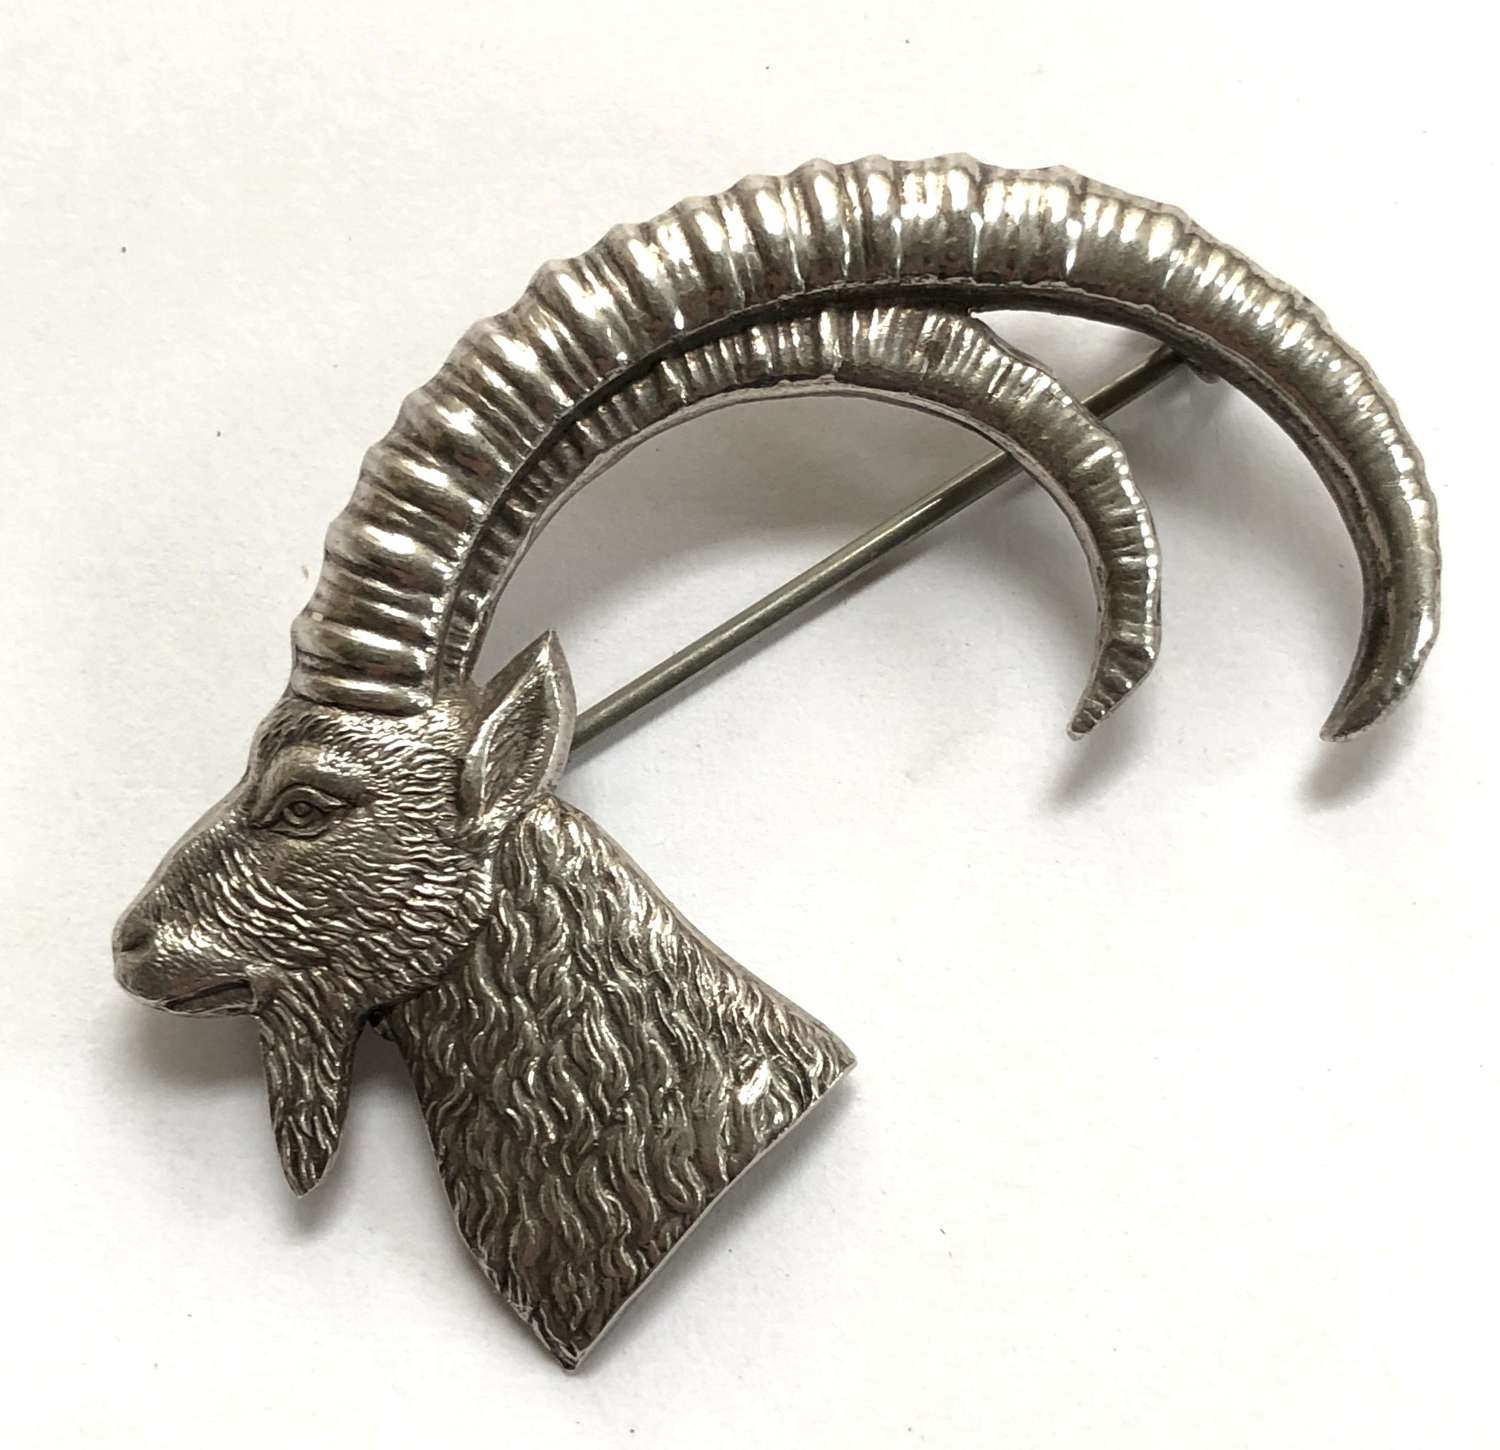 Africa. Port Sudan Suakin Province 1938 HM silver cap / pagri badge